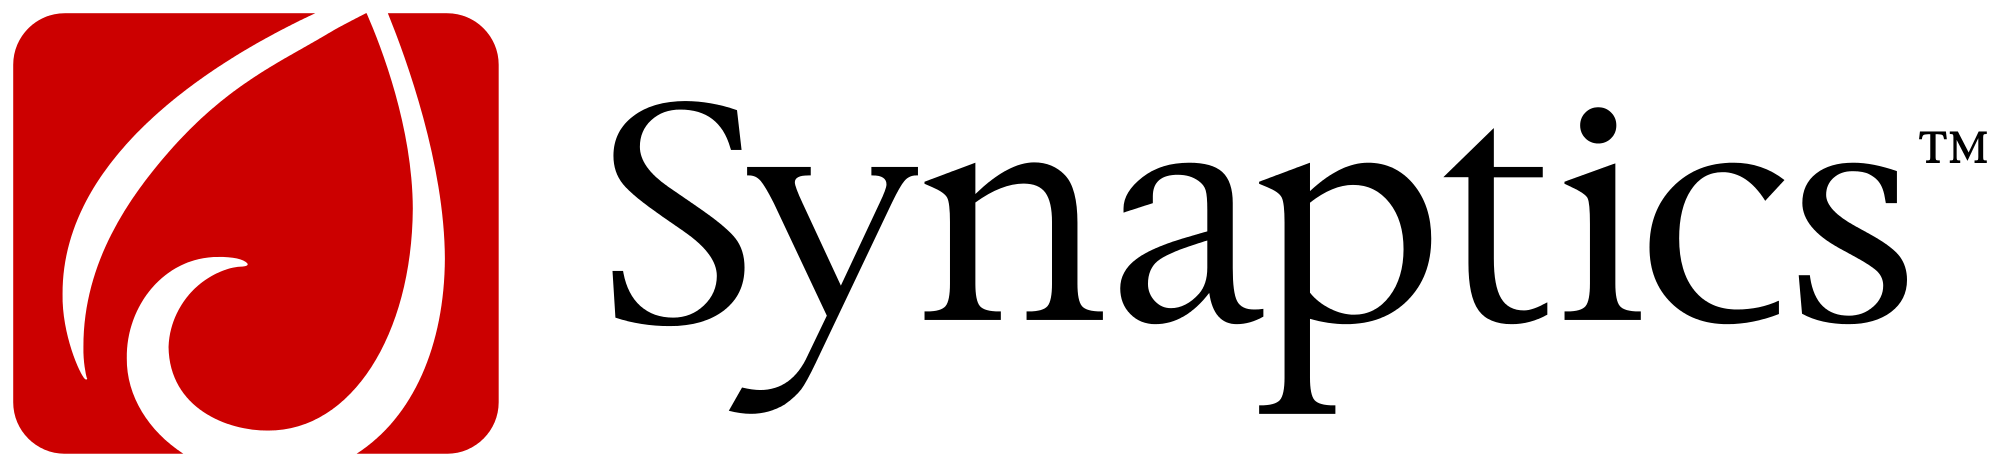 Synaptics Logo - Synaptics logo.svg